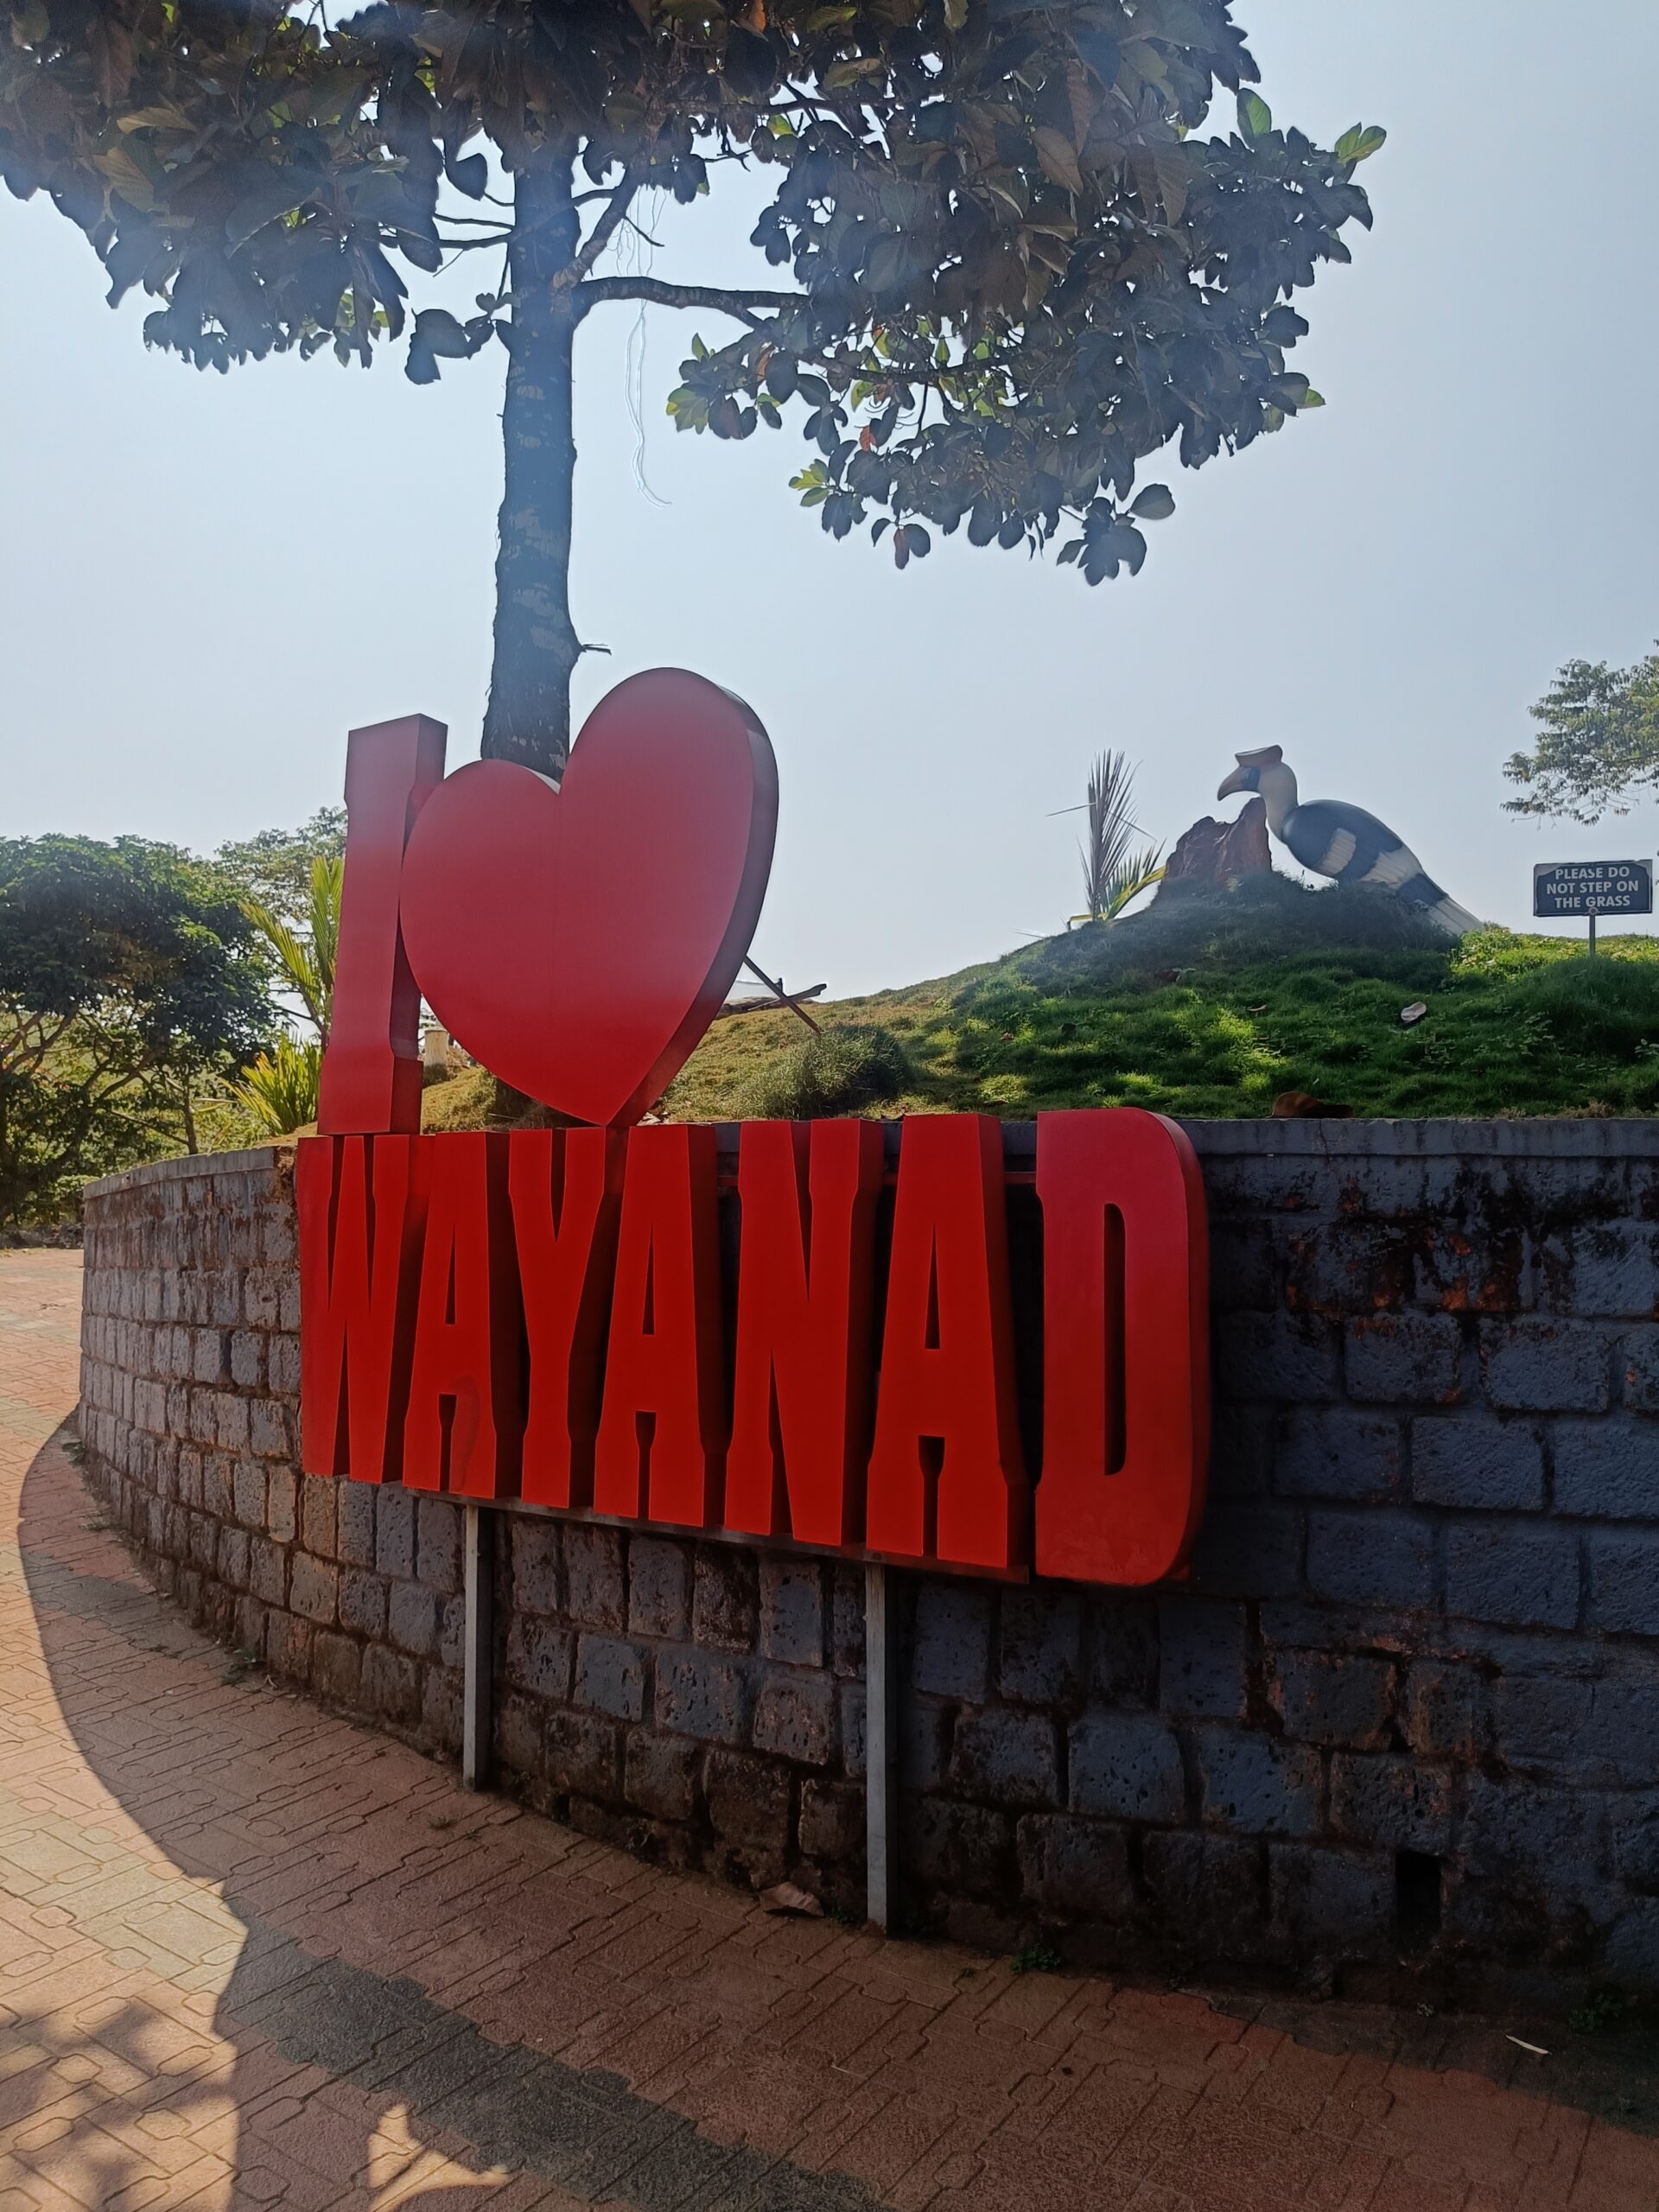 Wayanad Trip